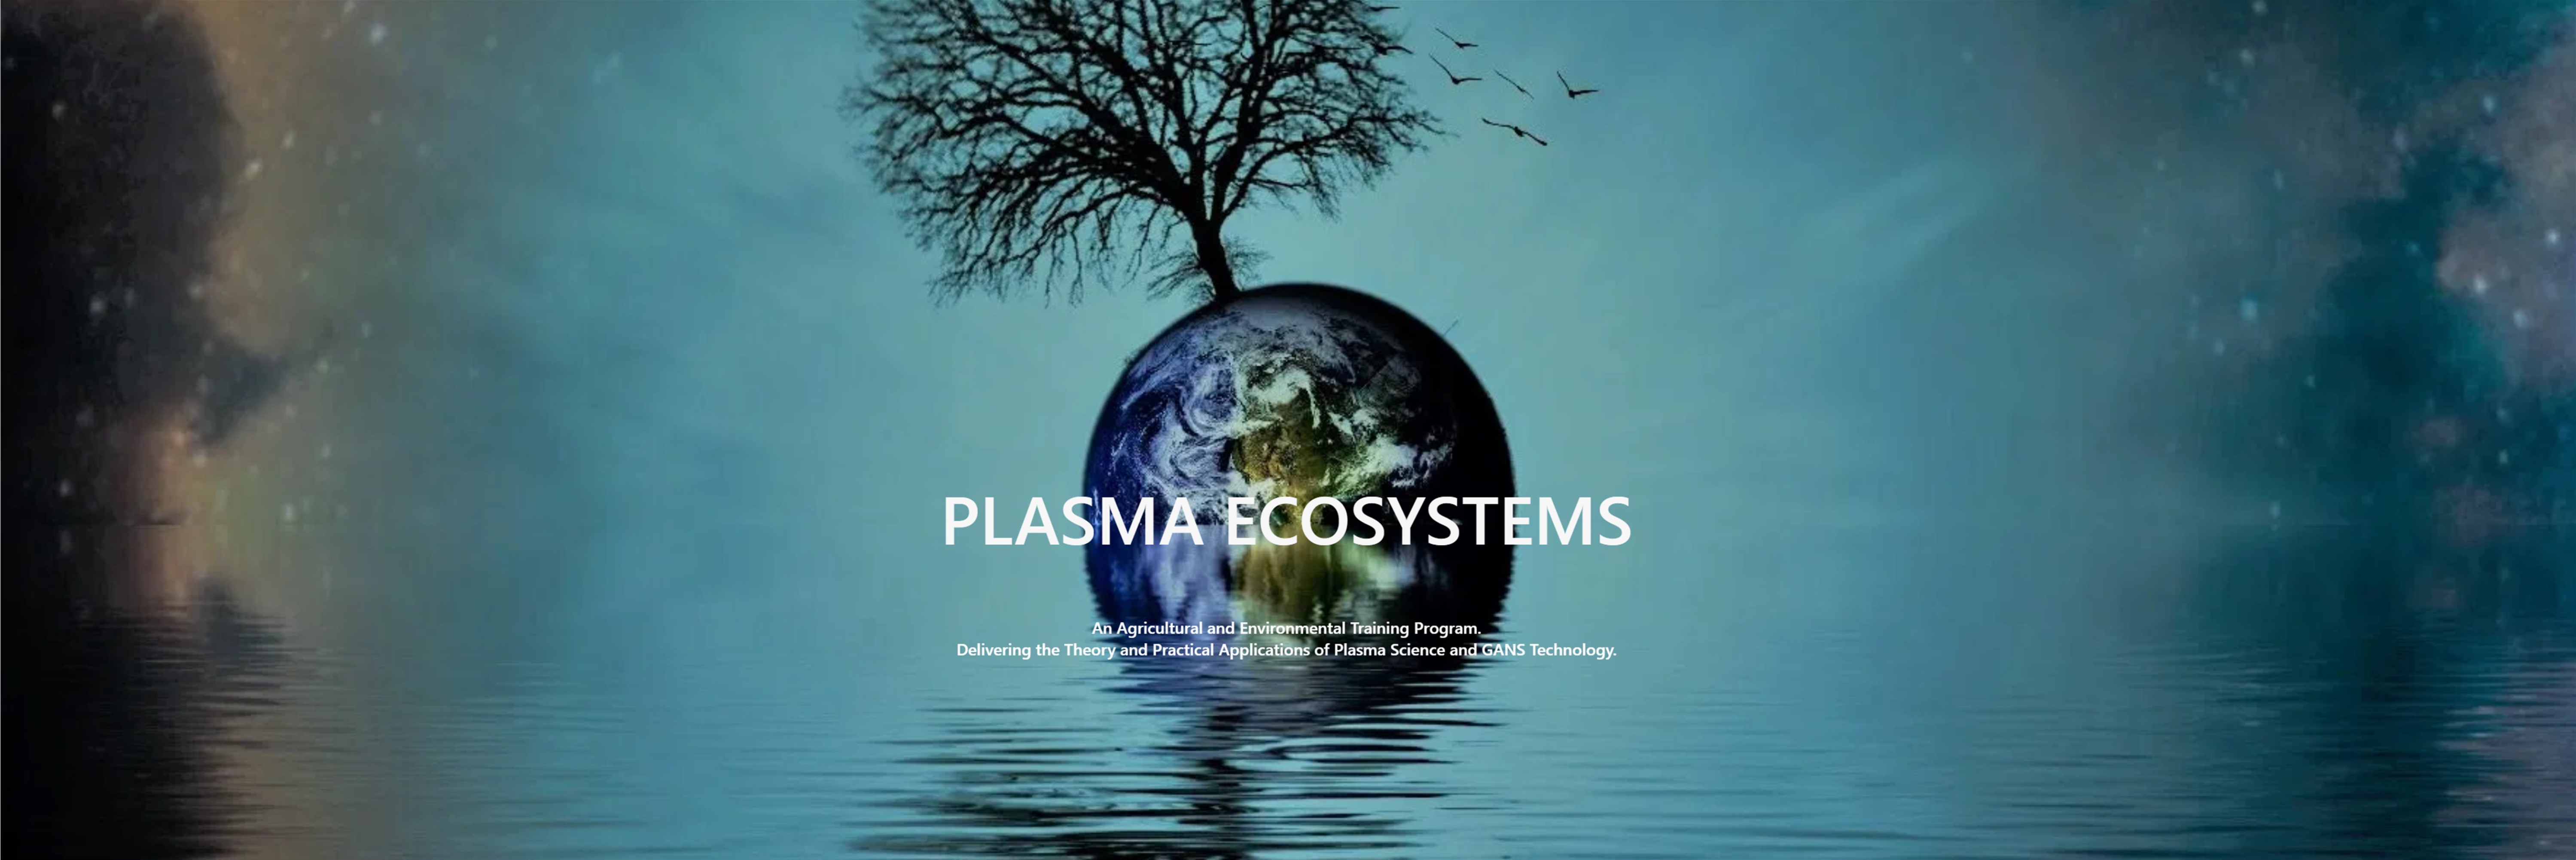 PlasmaEcosystems